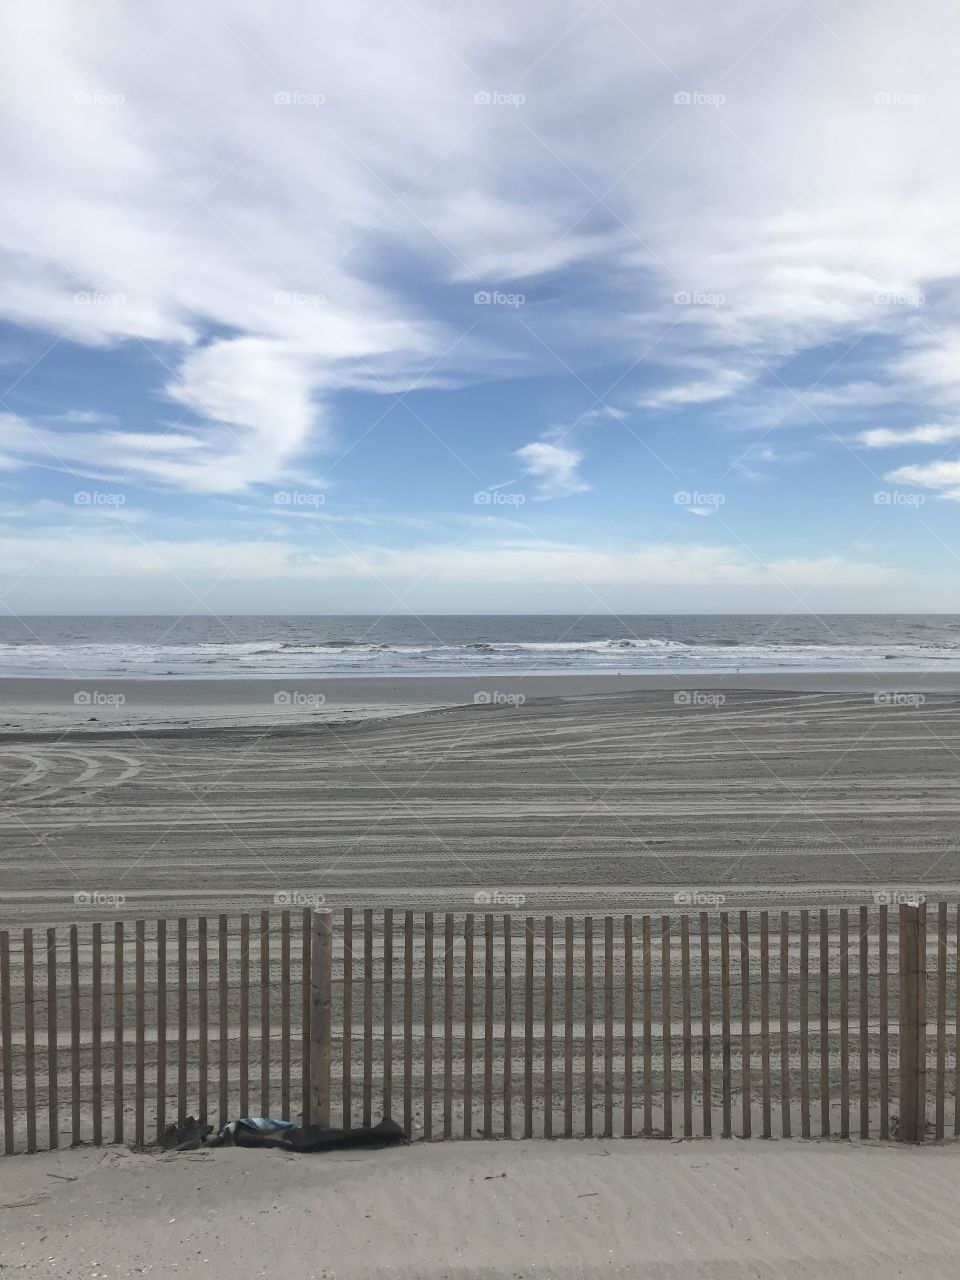 Atlantic City, NJ beach view from boardwalk in October